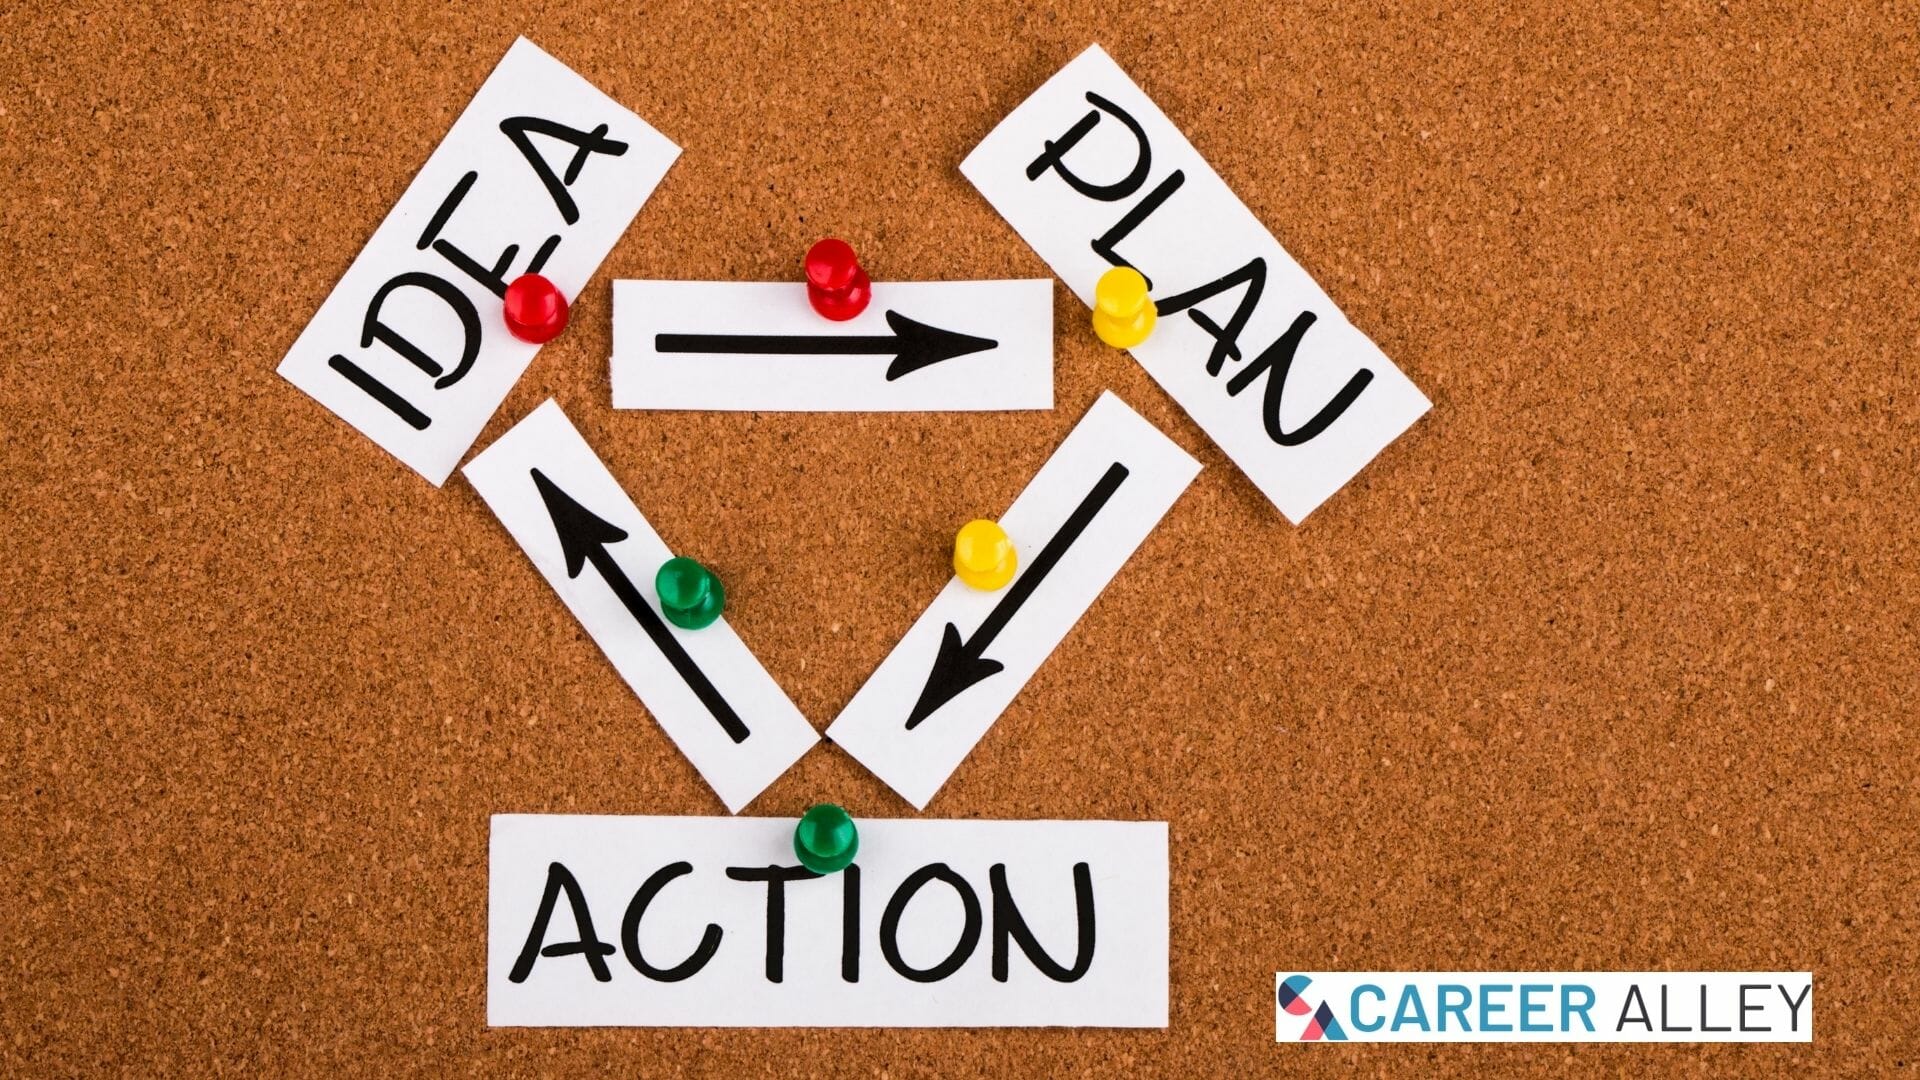 idea plan action